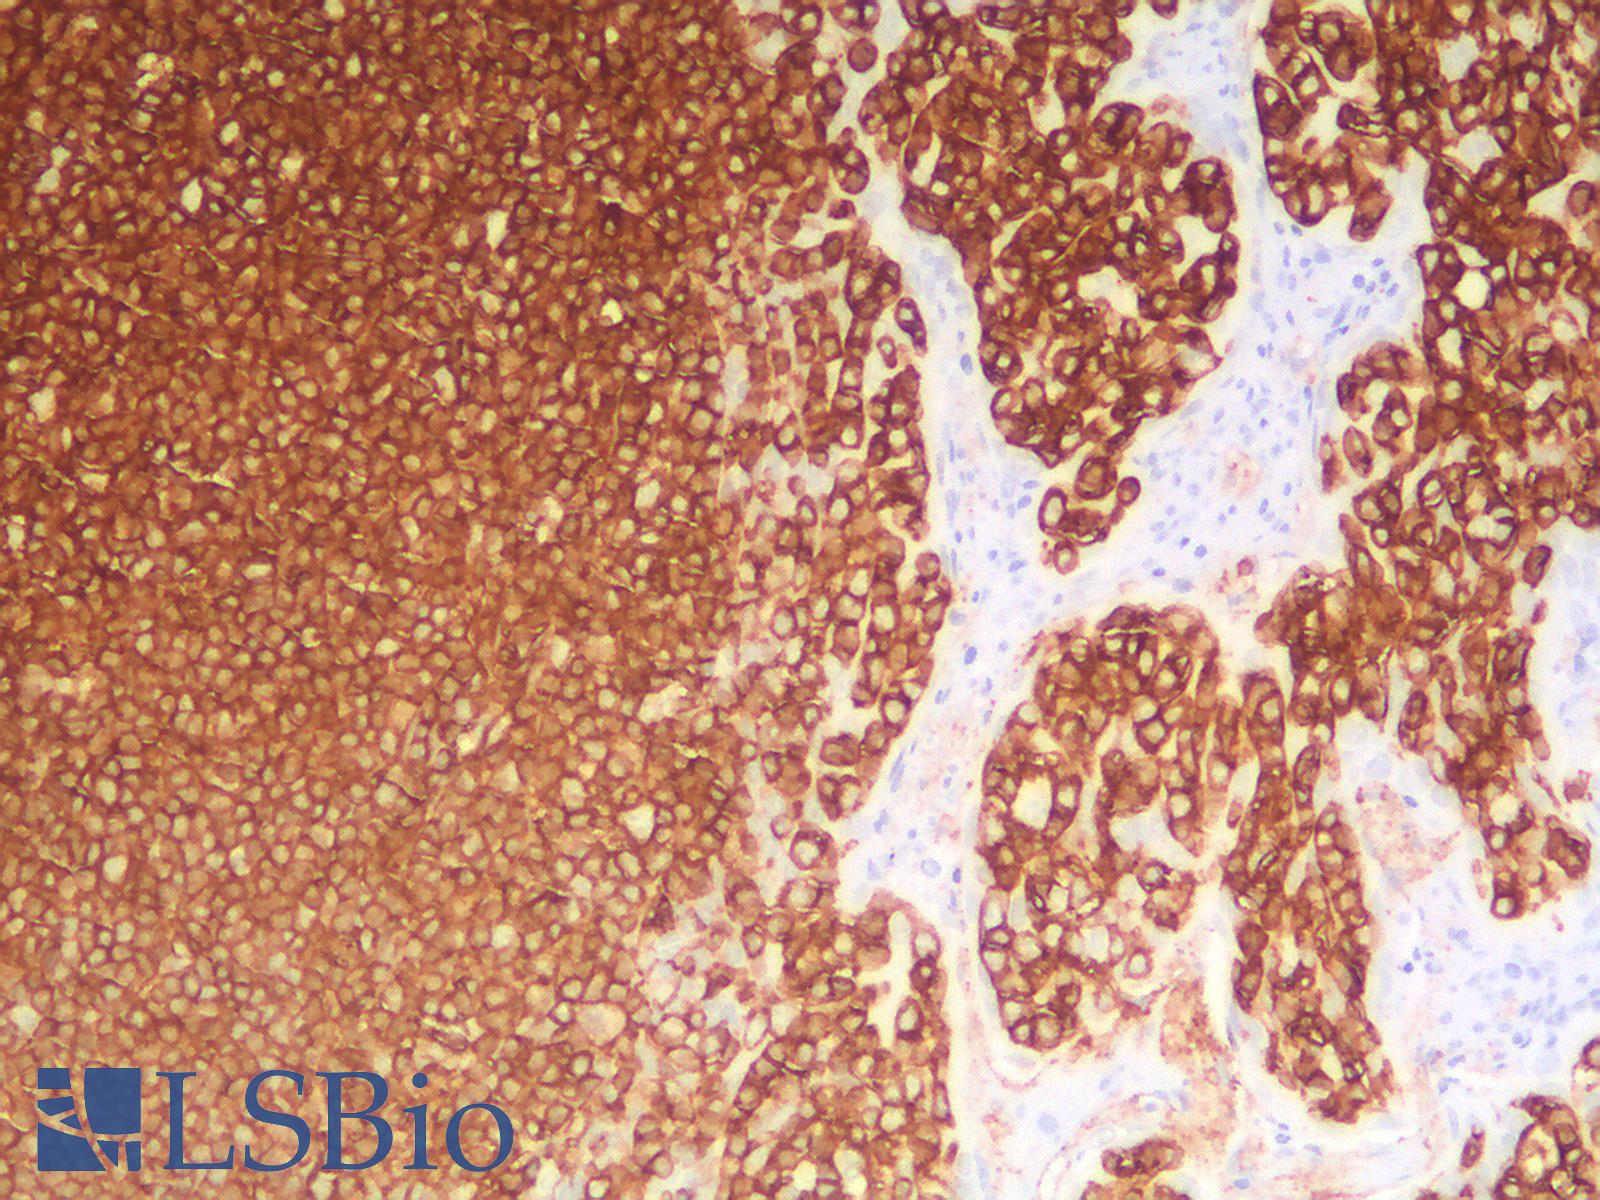 CD45 / LCA Antibody - Human Tonsil: Formalin-Fixed, Paraffin-Embedded (FFPE)